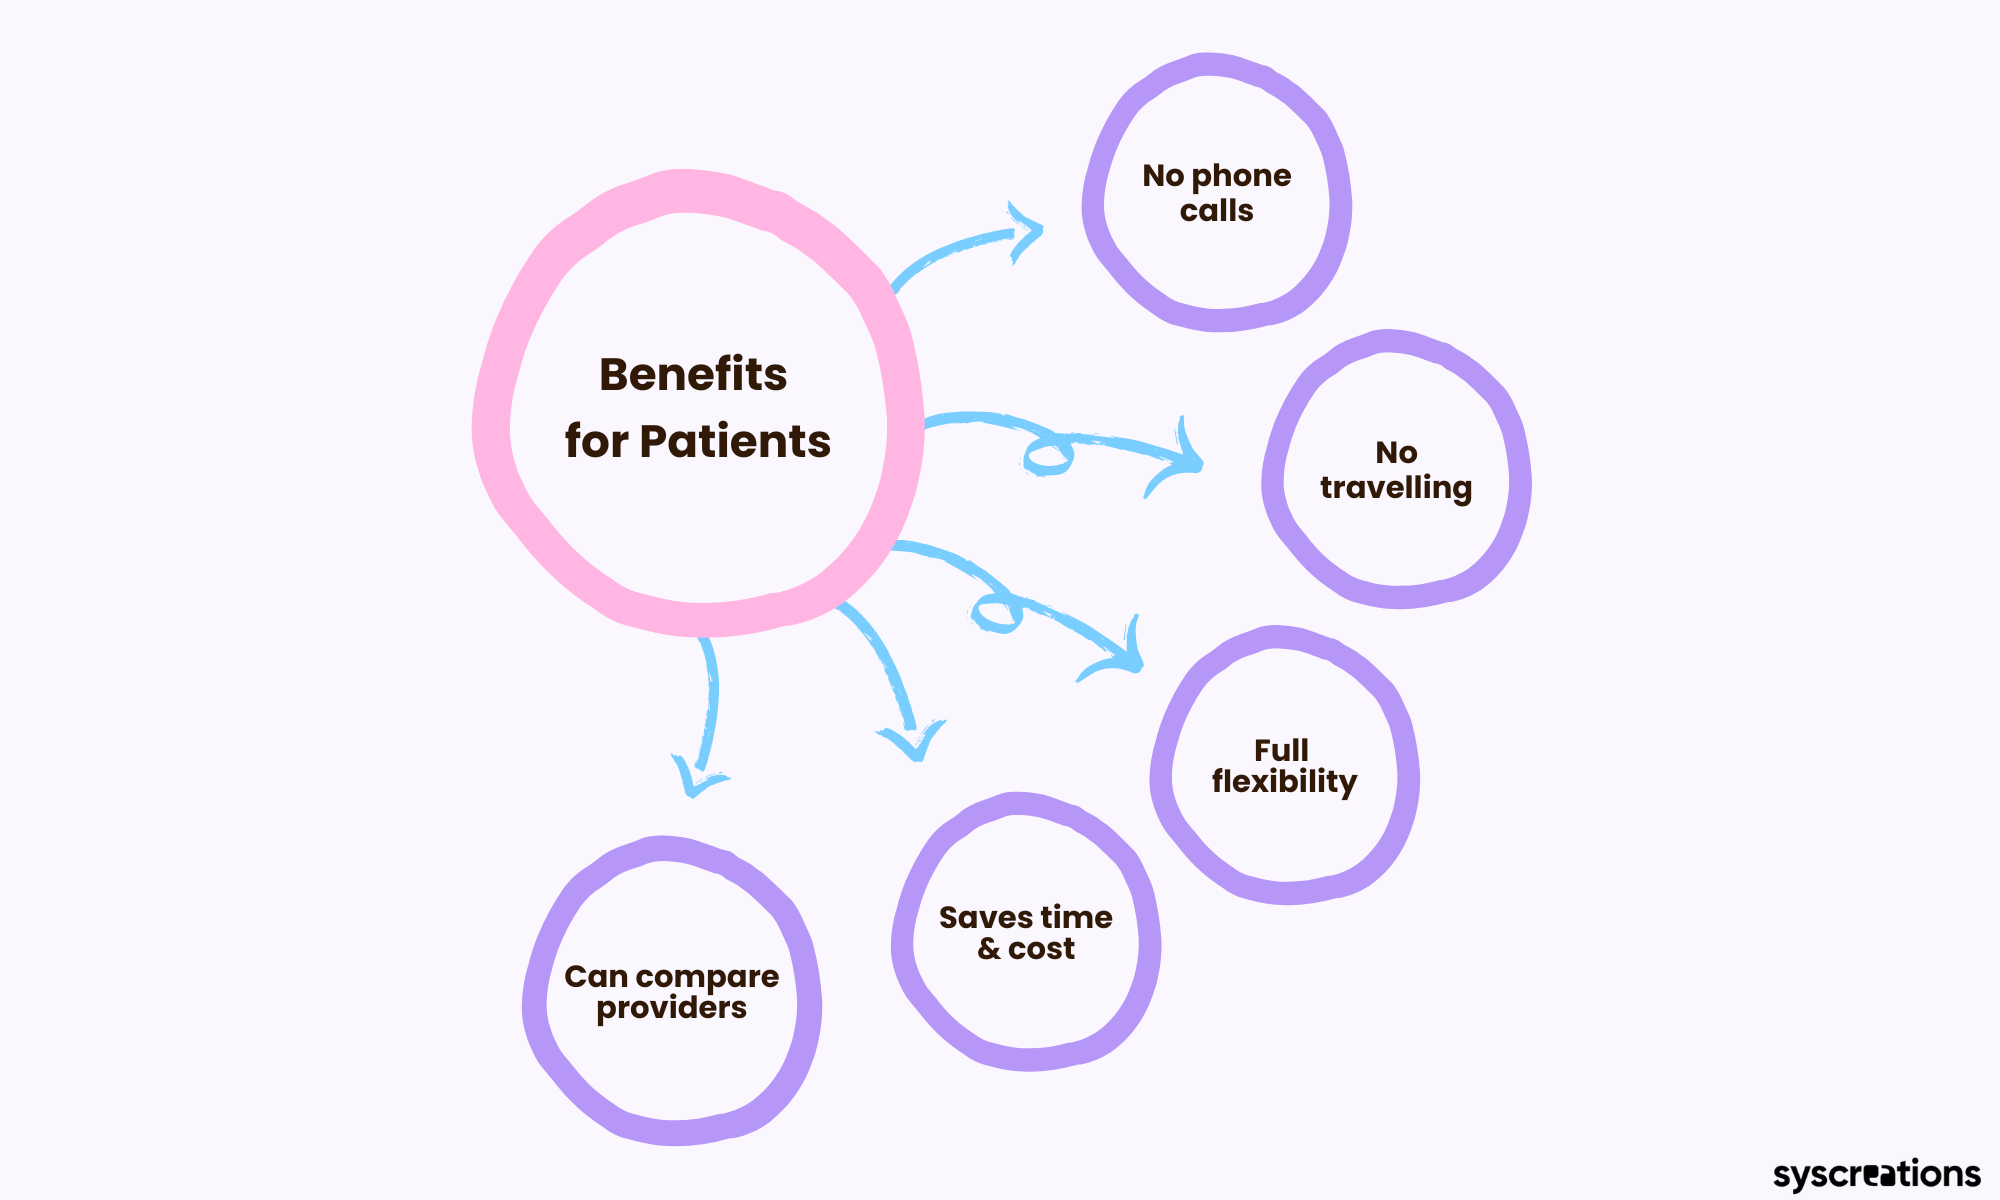 App benefits for patients